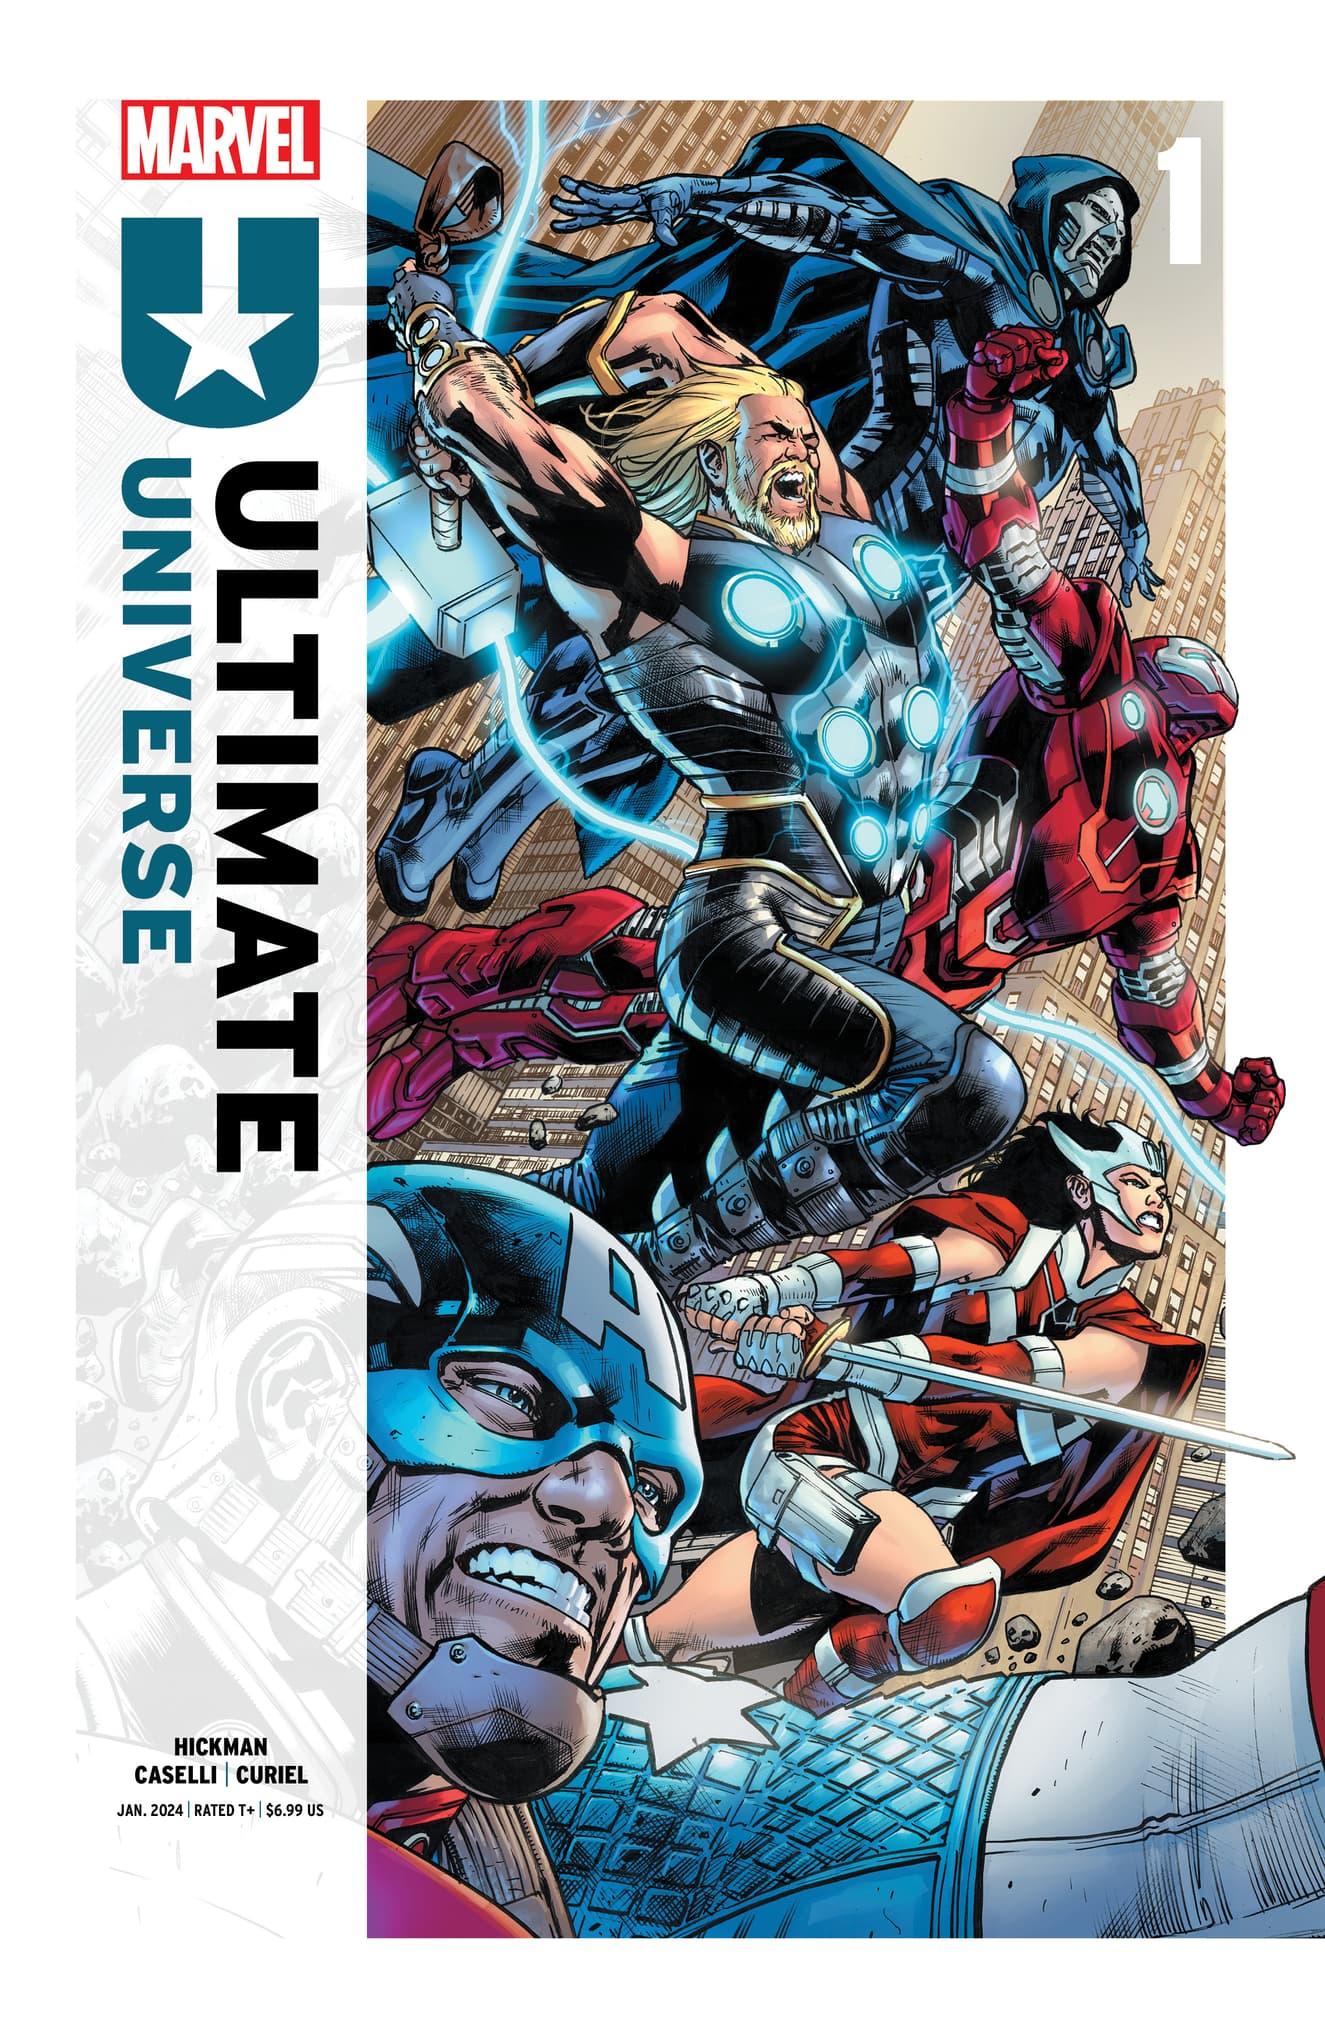 Marvel Reveals the New Ultimate Avengers Team